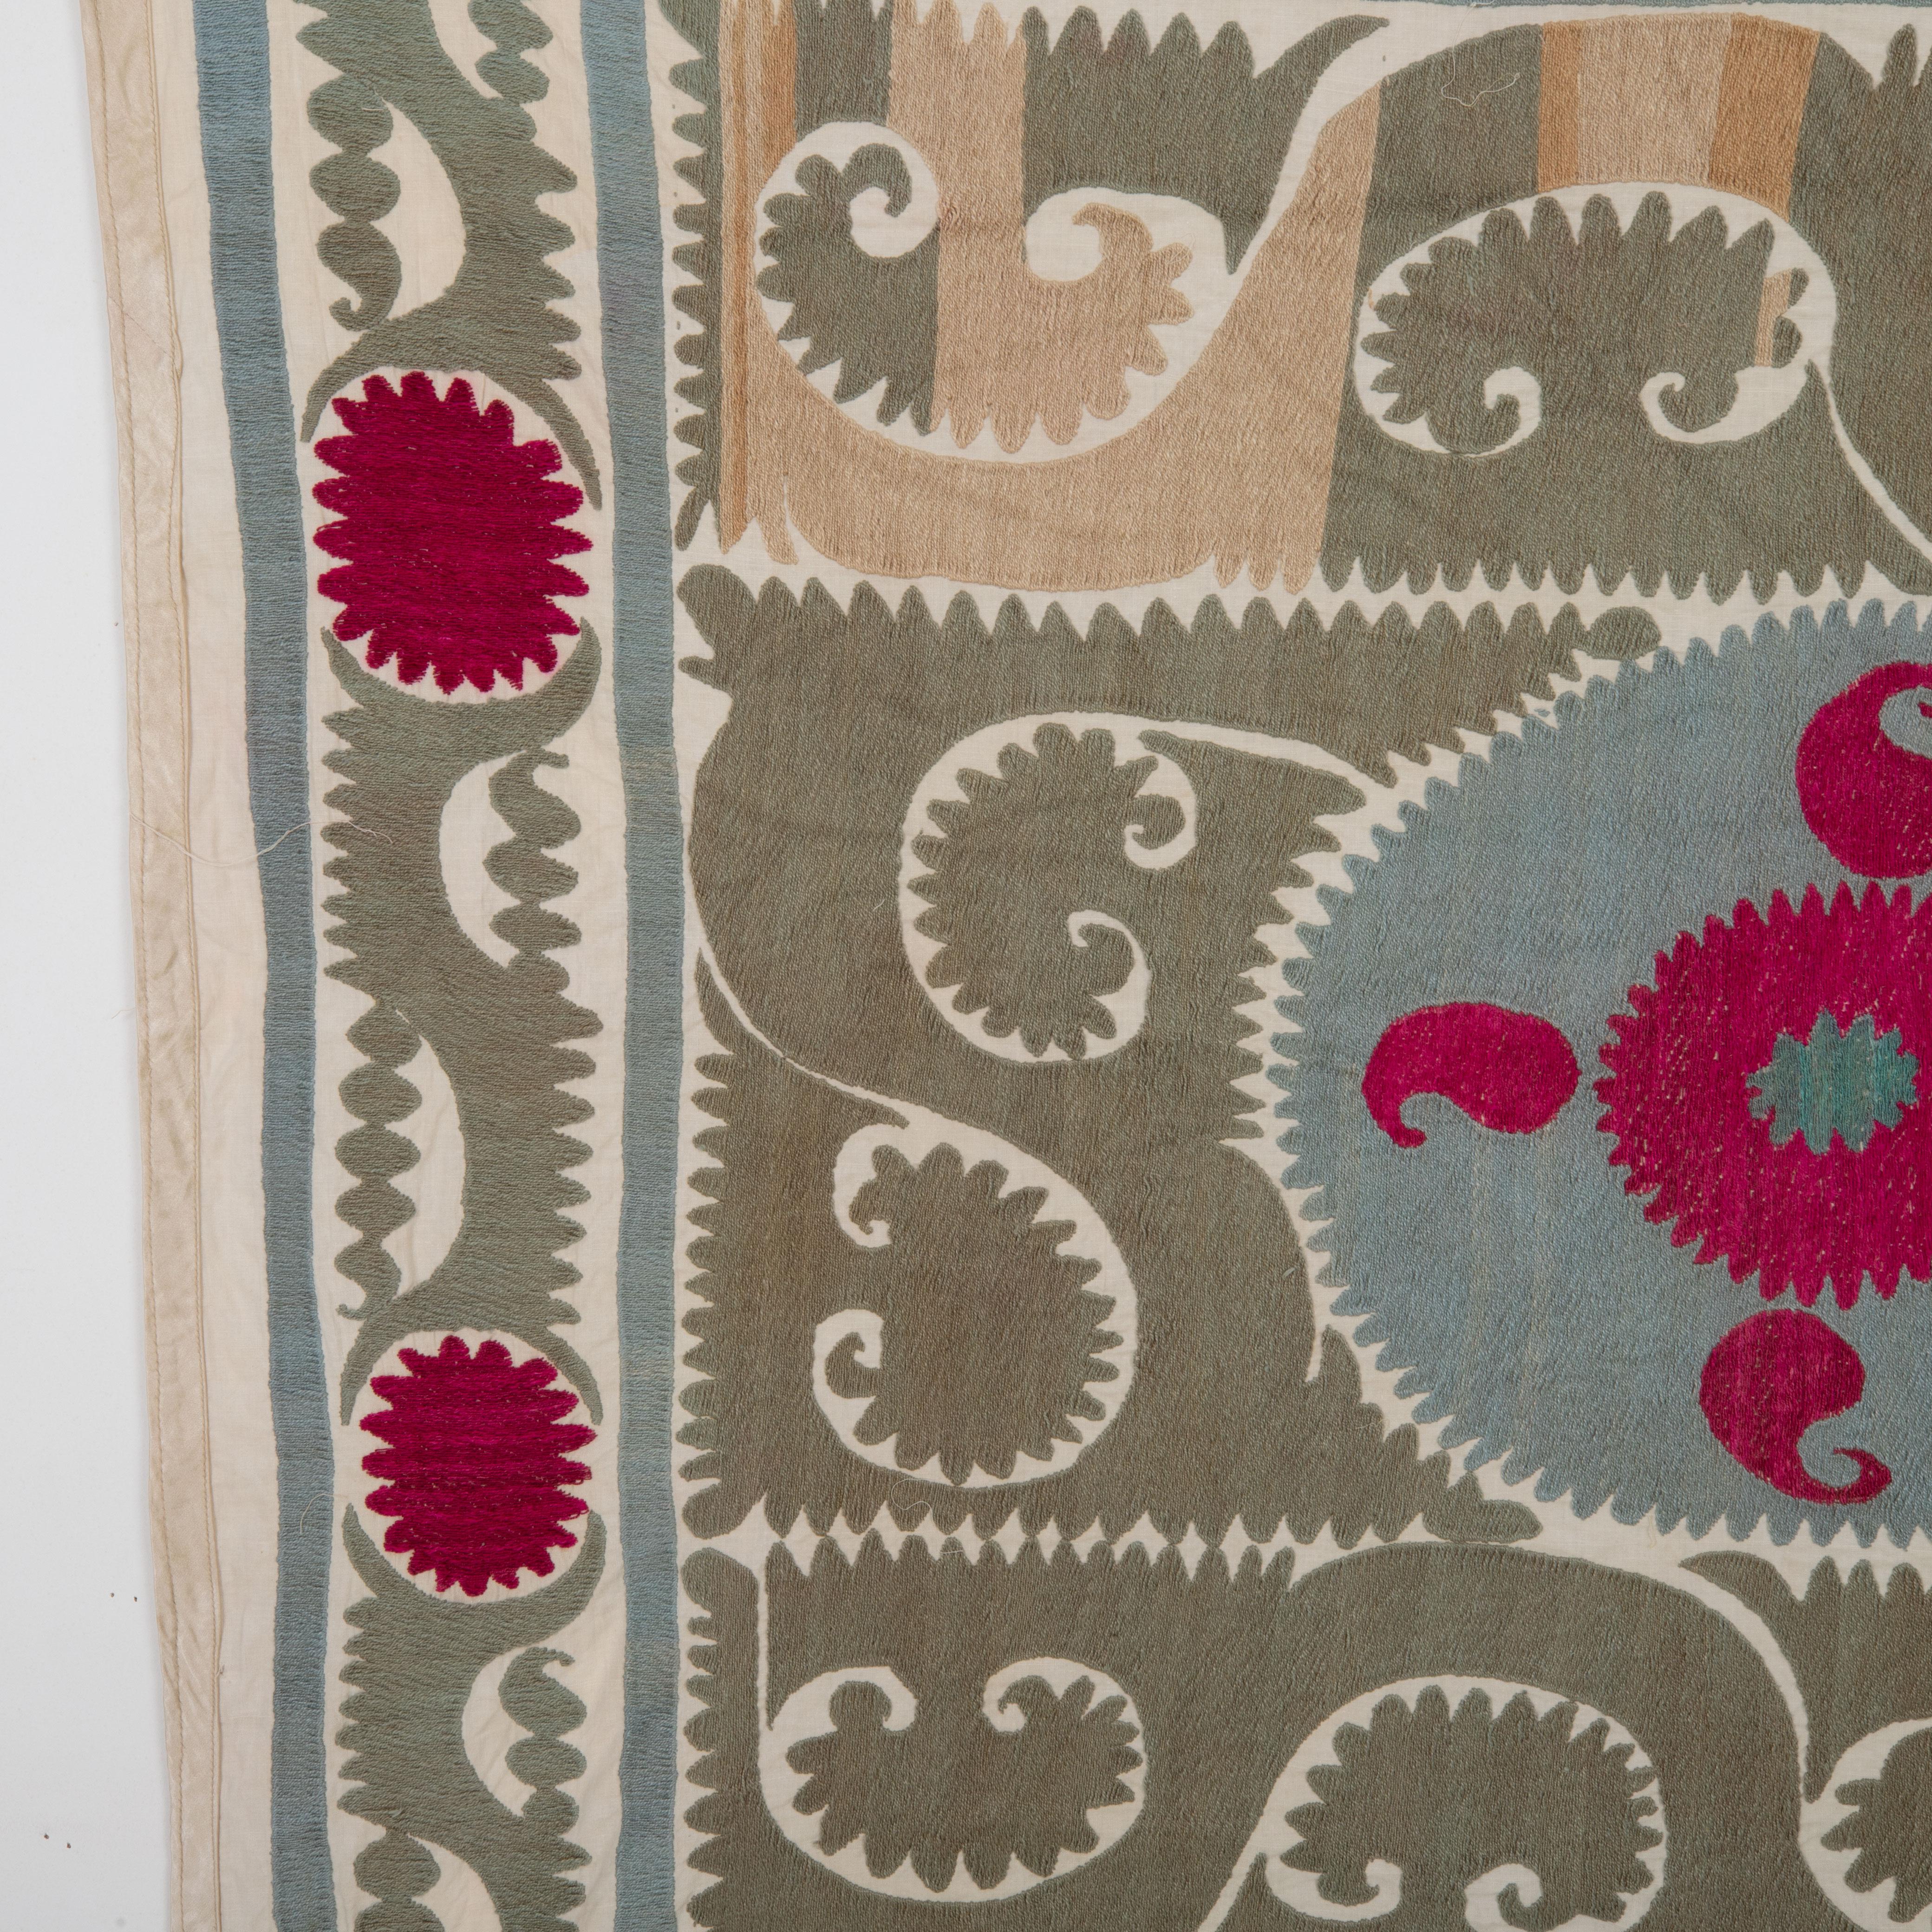 Folk Art Suzani Embroidery from 1970s, Uzbekistan 1